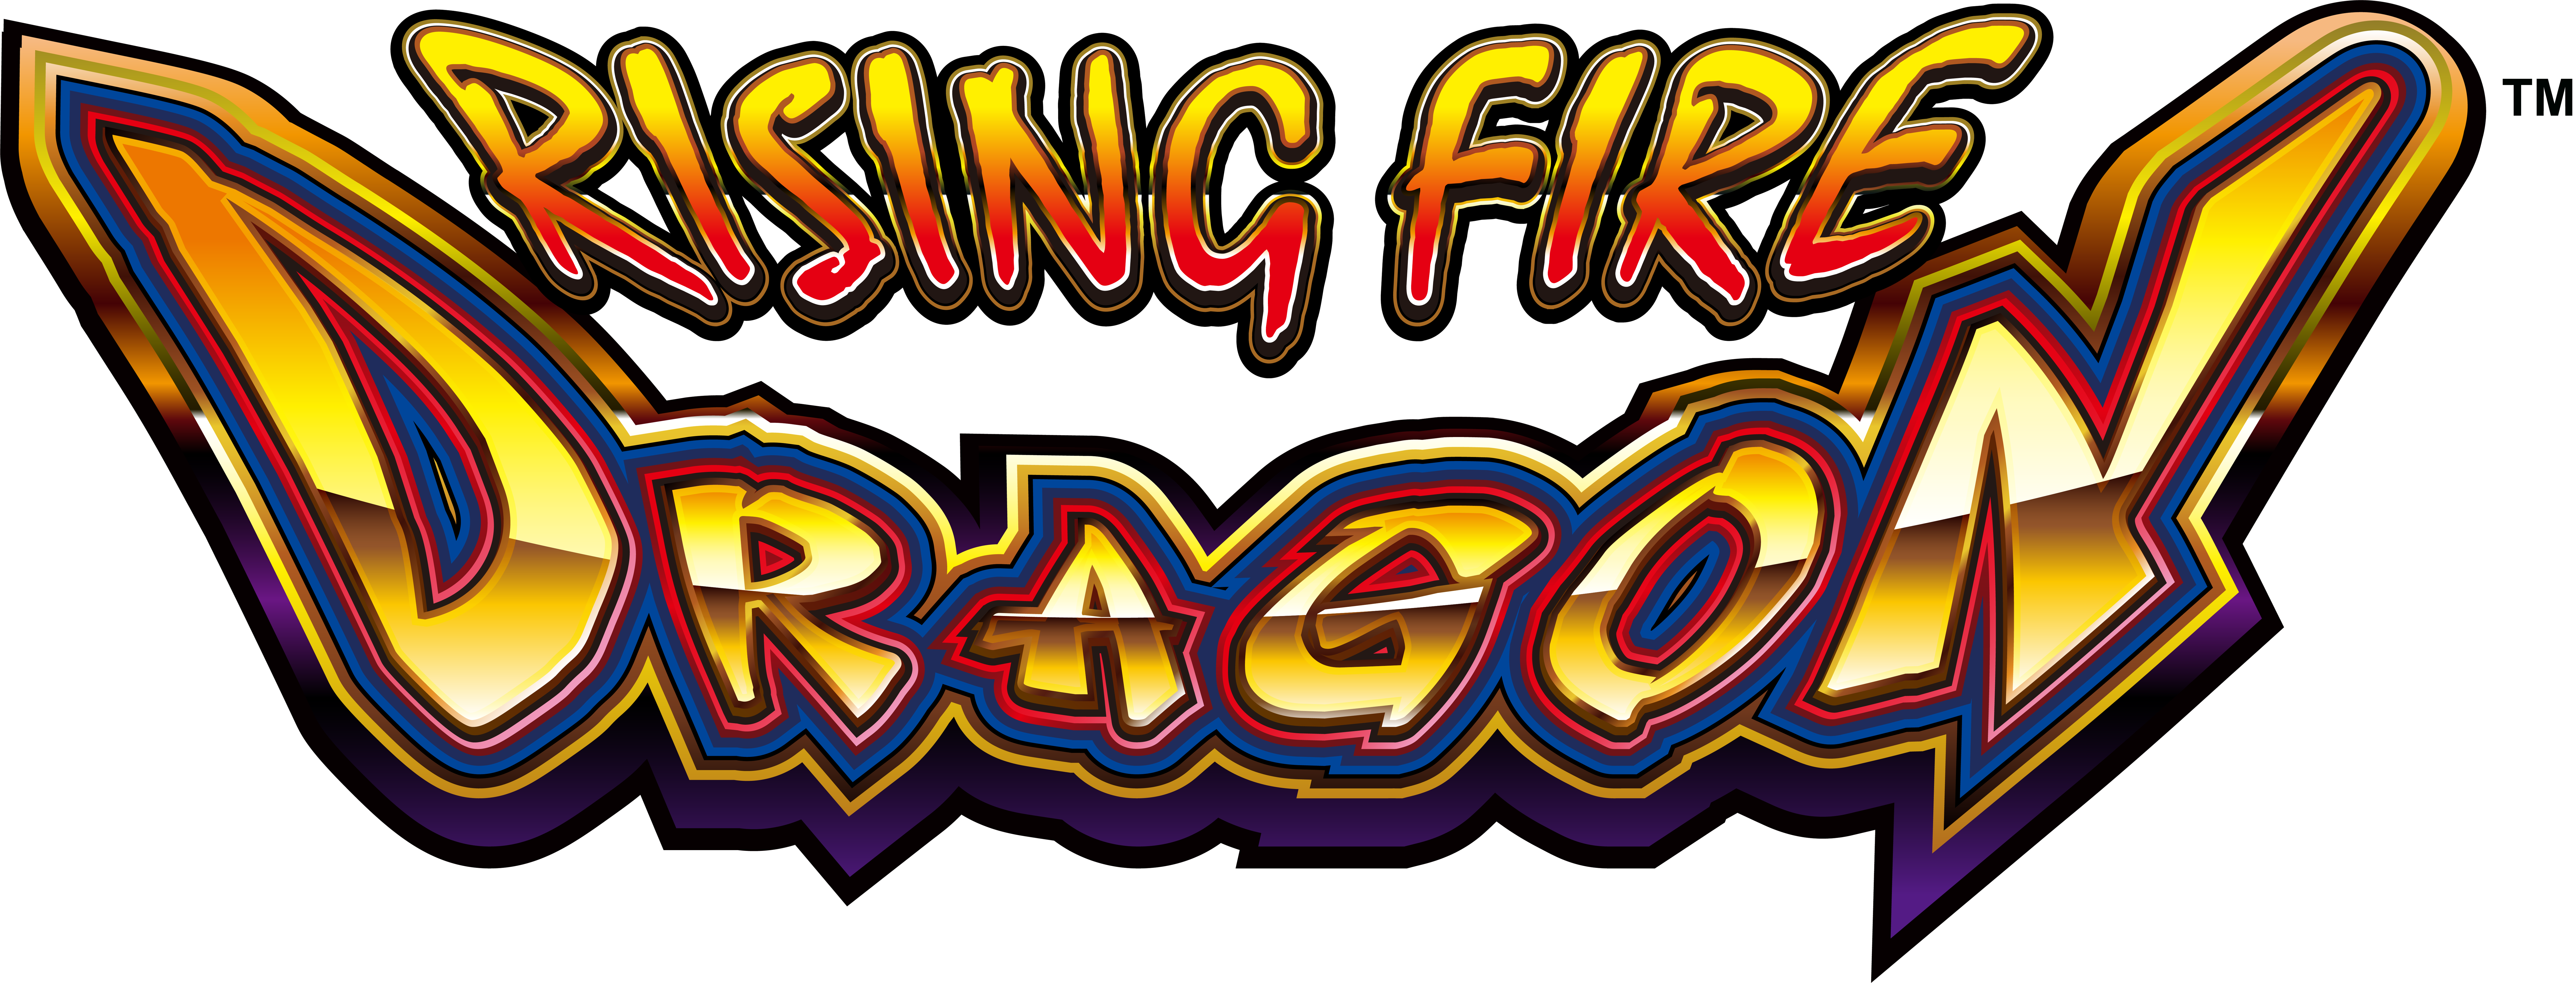 Rising Fire Dragon Logo